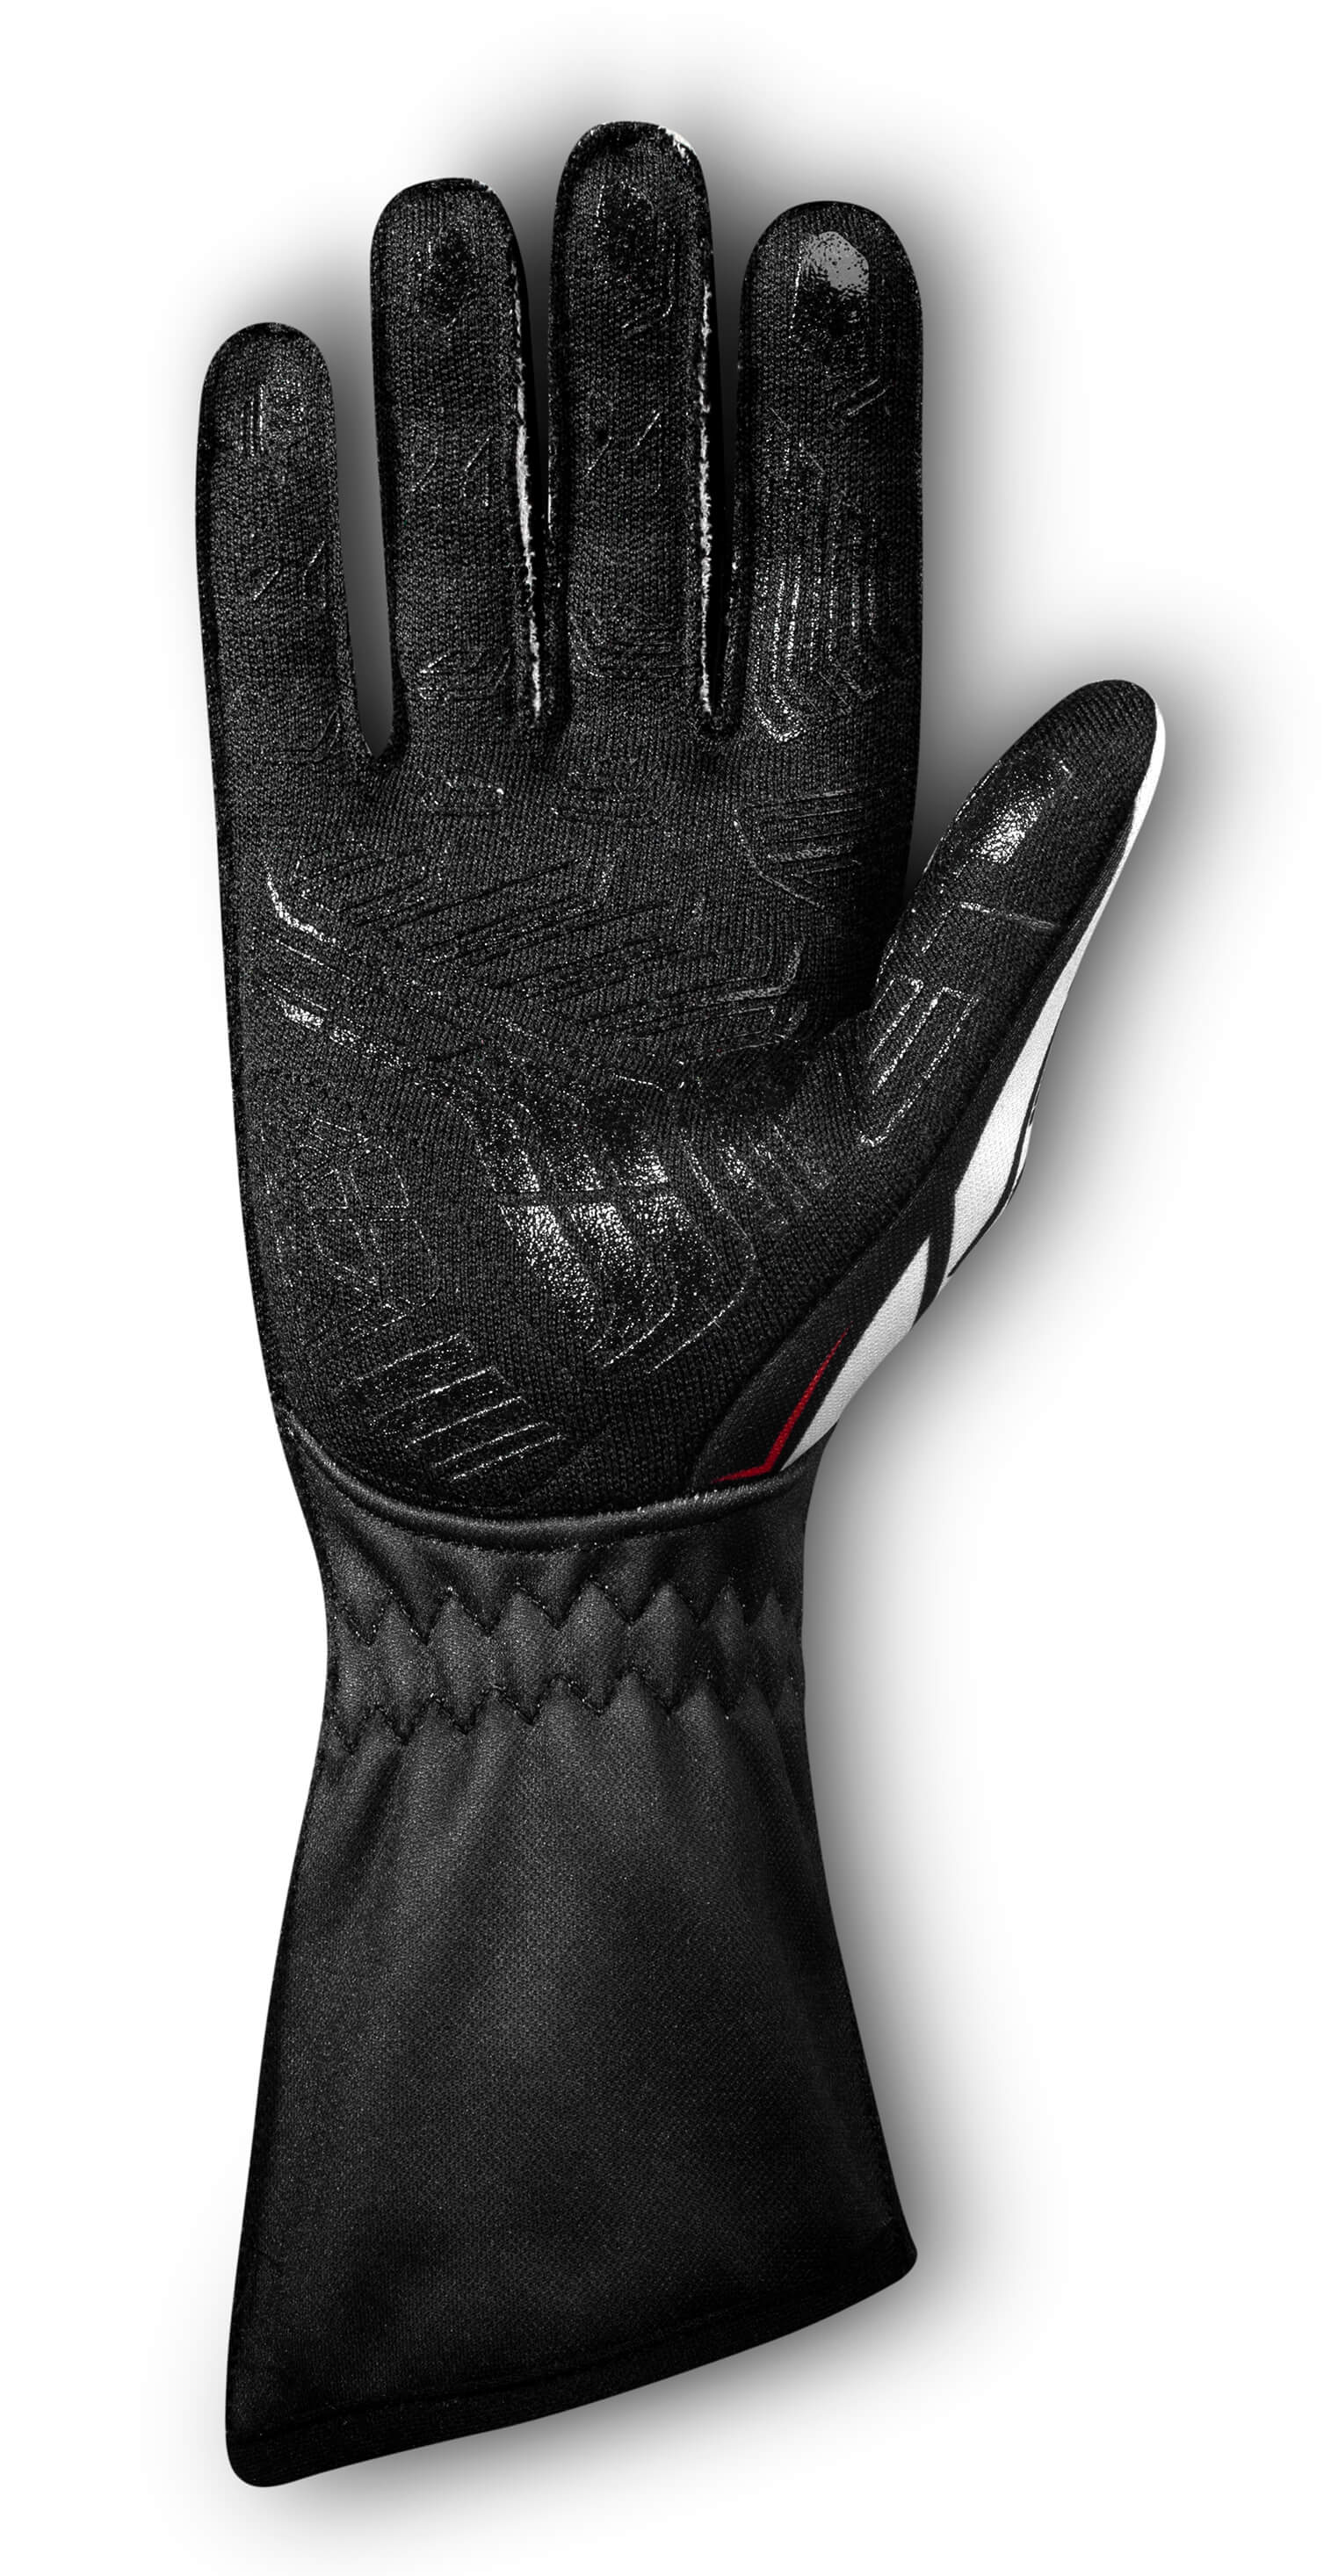 ᐉ SPARCO 00255807NRRS ARROW-K INFINITY Karting gloves, CIK,  black/red/white, size 7